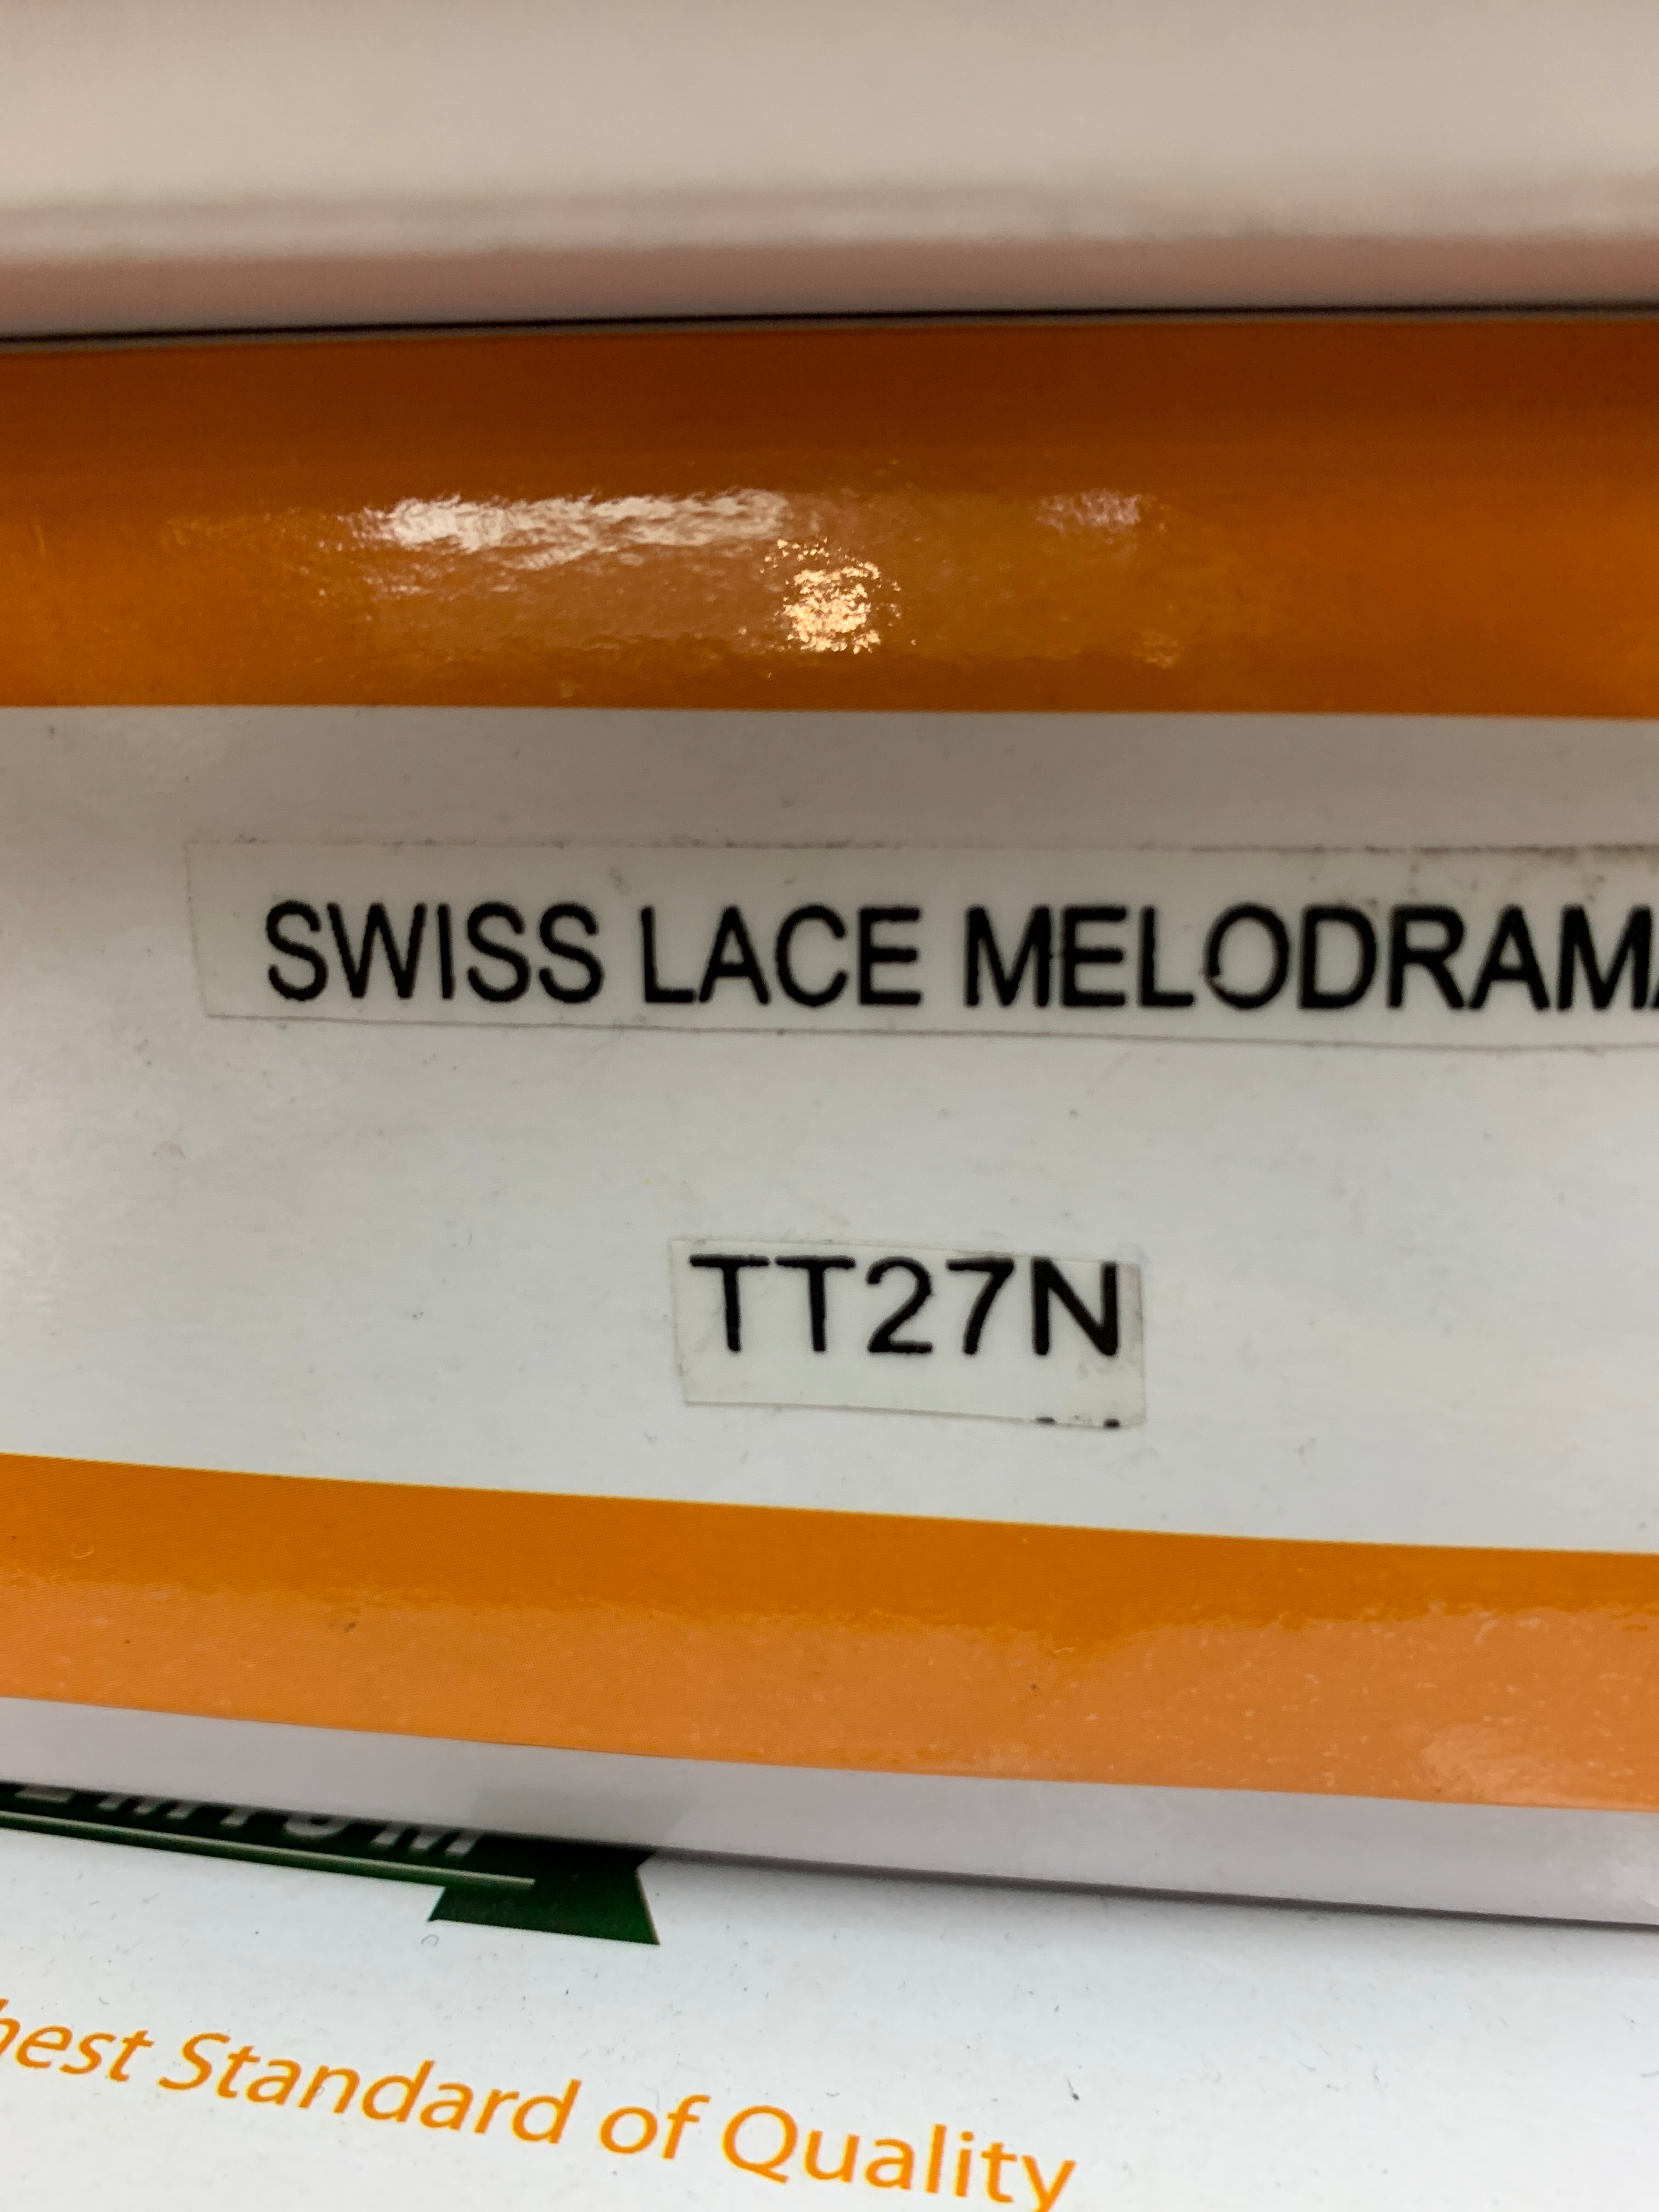 It’s a wig swiss lace Melodrama